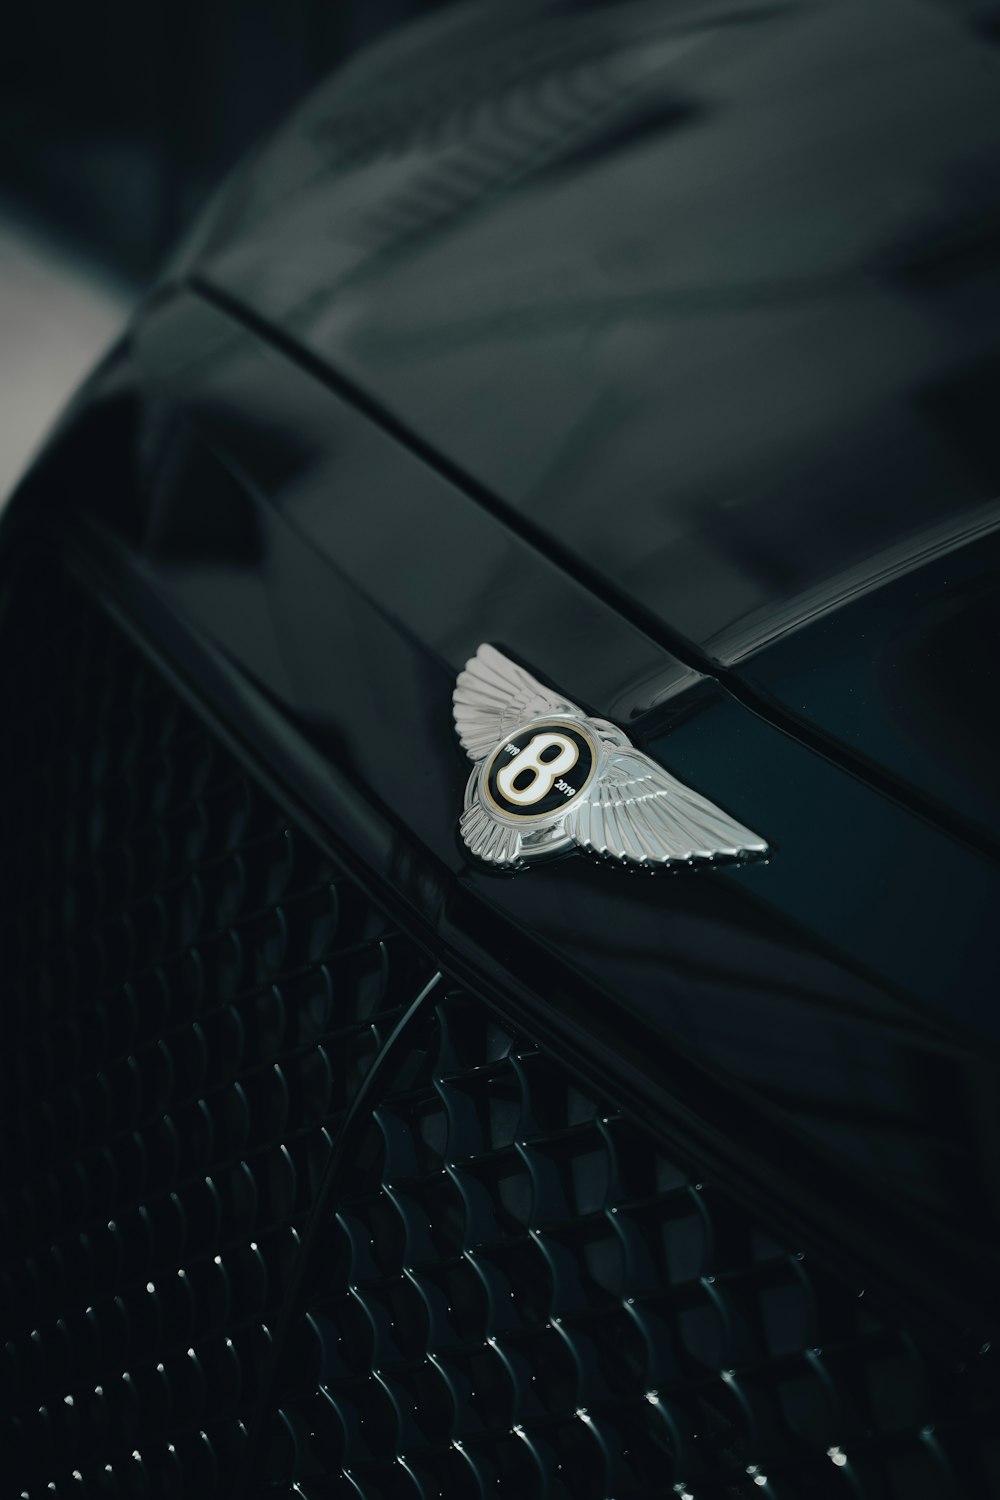 a close up of a bentley logo on a car